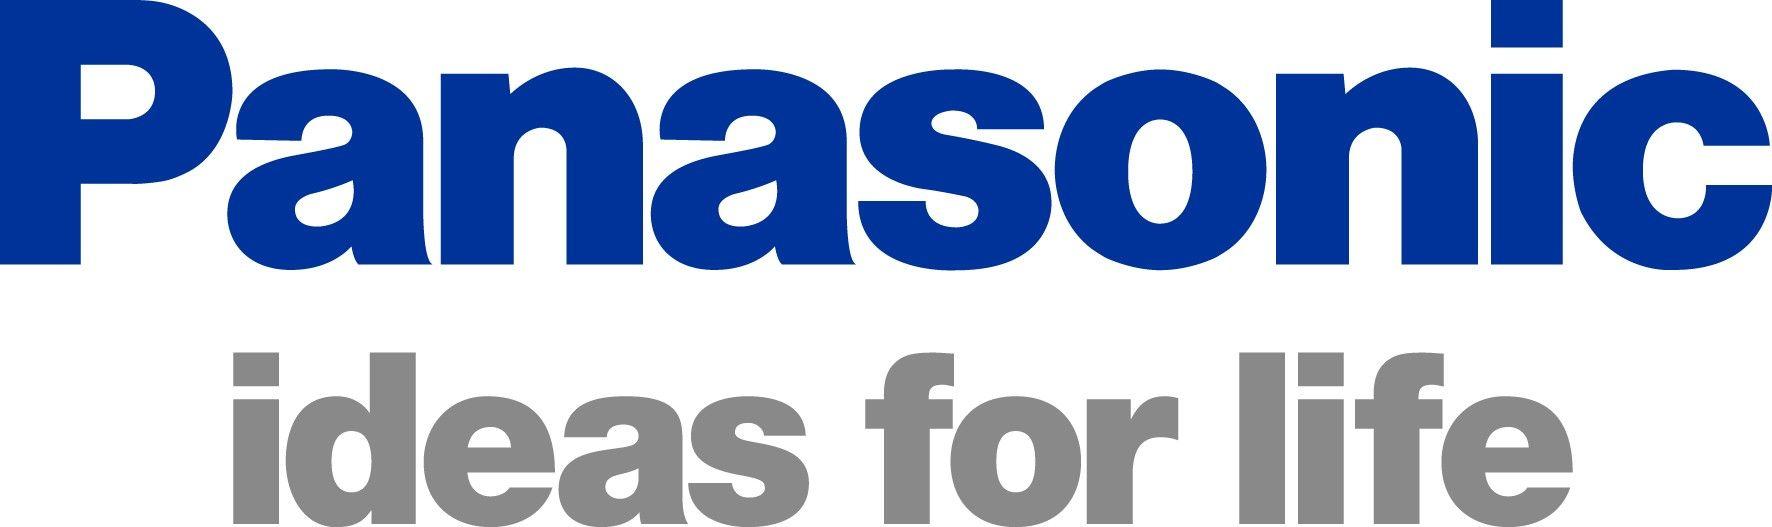 Panasonic Logo - panasonic-logo-14ef870d7a - MediaPlace